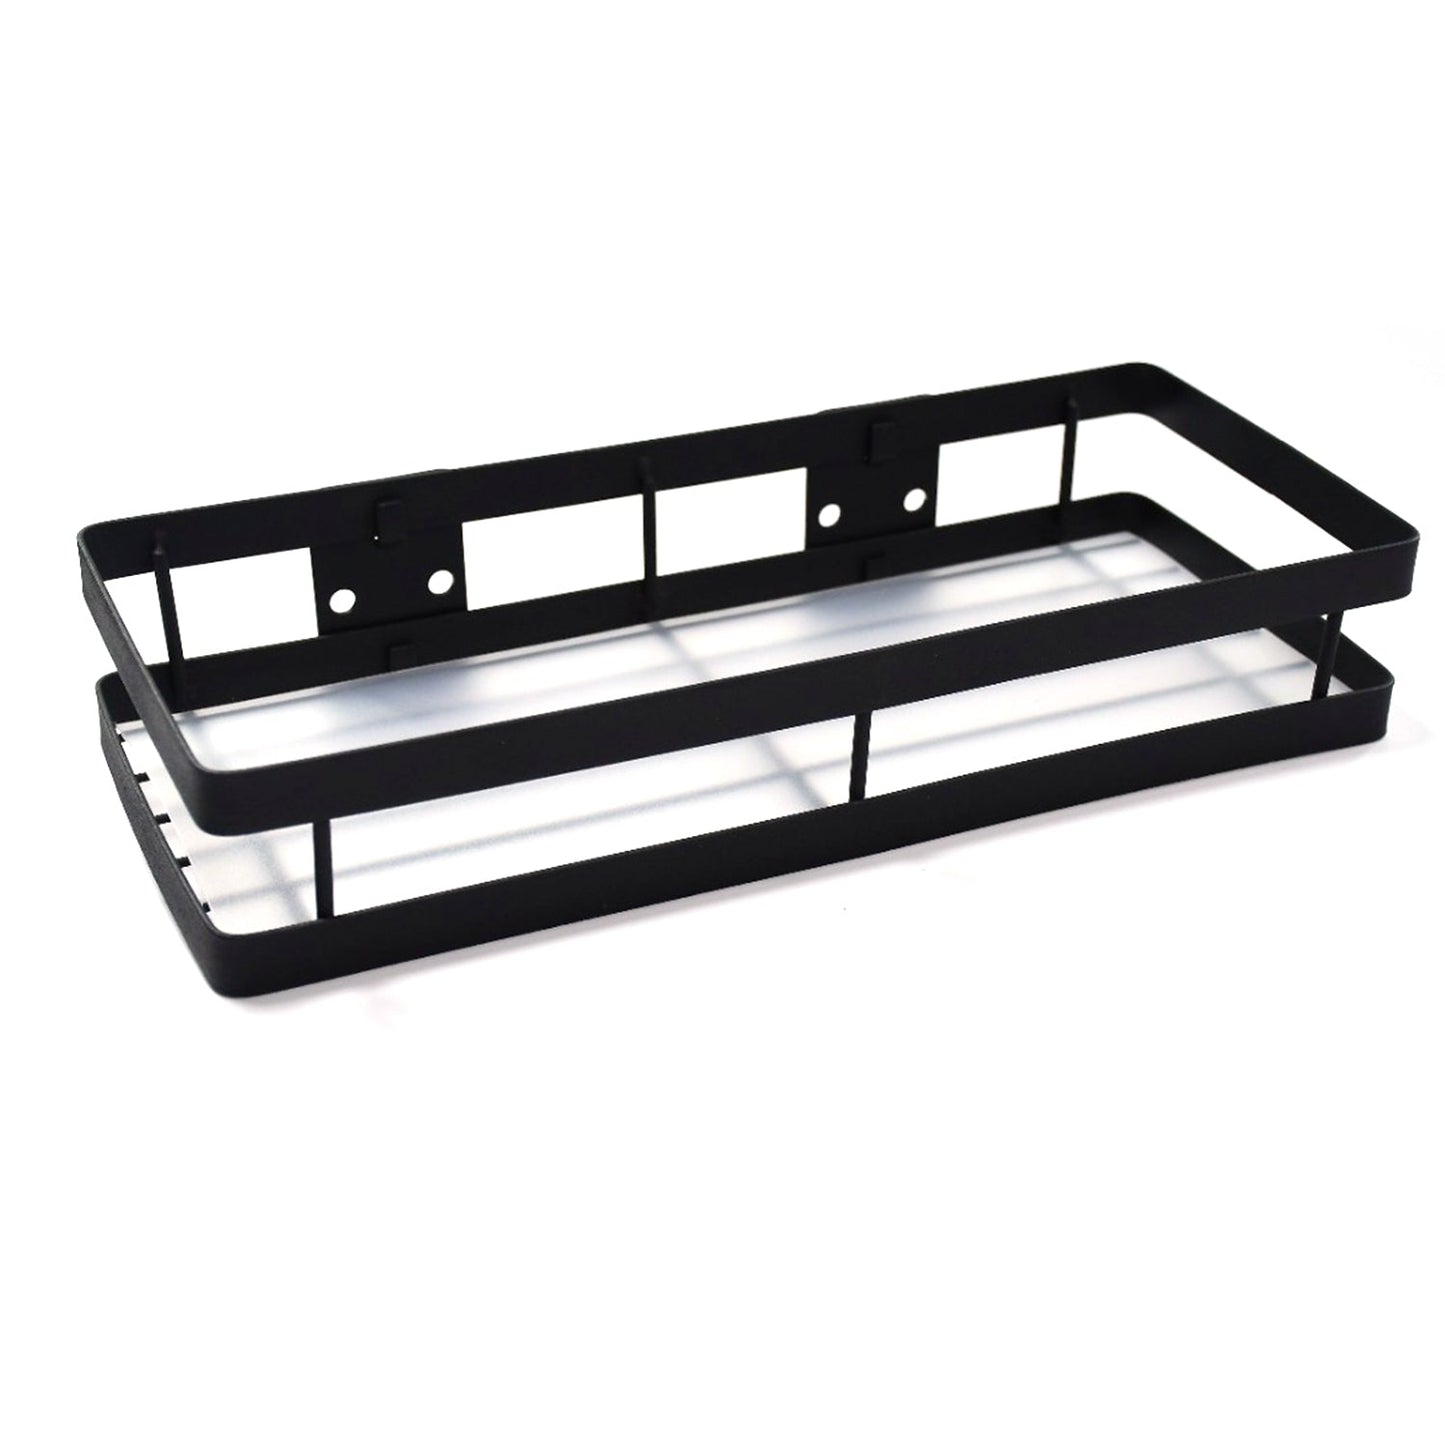 4923 30cm Metal Space Saving Multi-Purpose rack for Kitchen Storage Organizer Shelf Stand. DeoDap